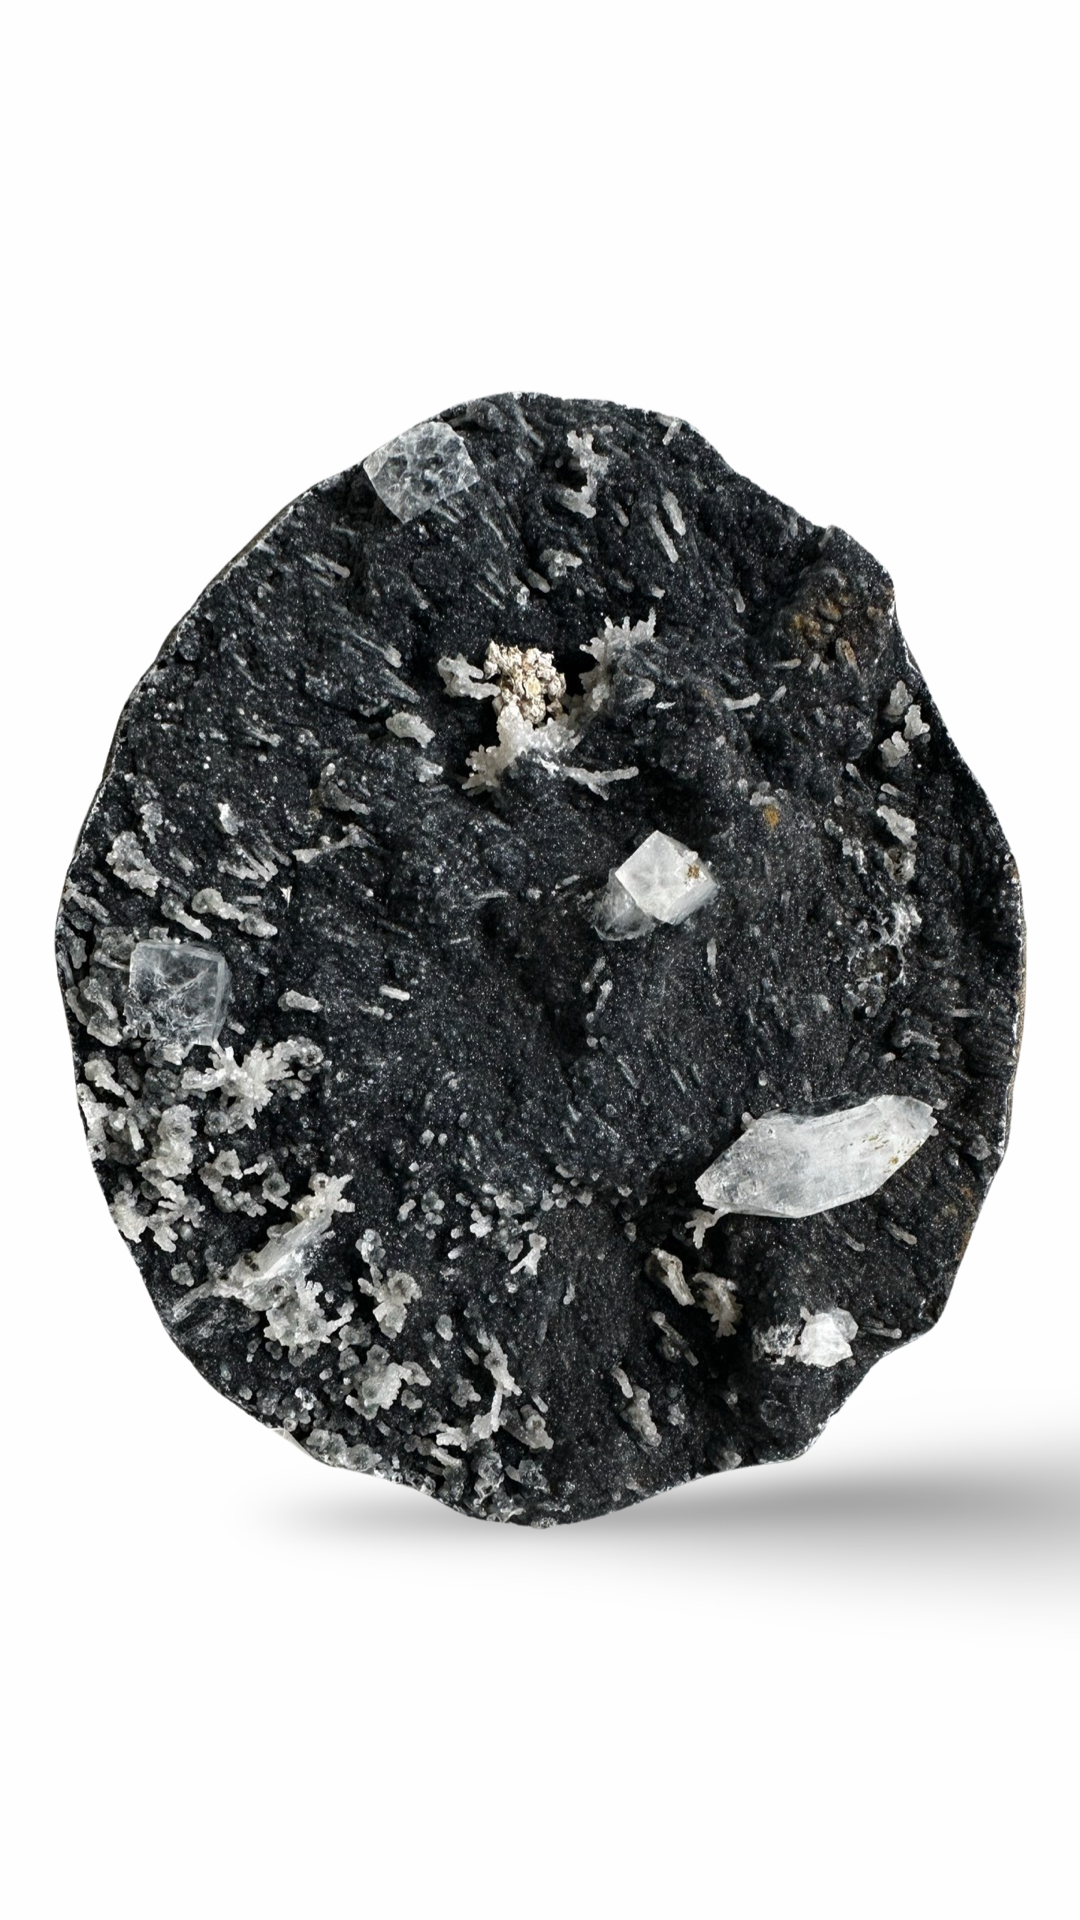 Gyrolite & Chalcedony Mineral Specimen